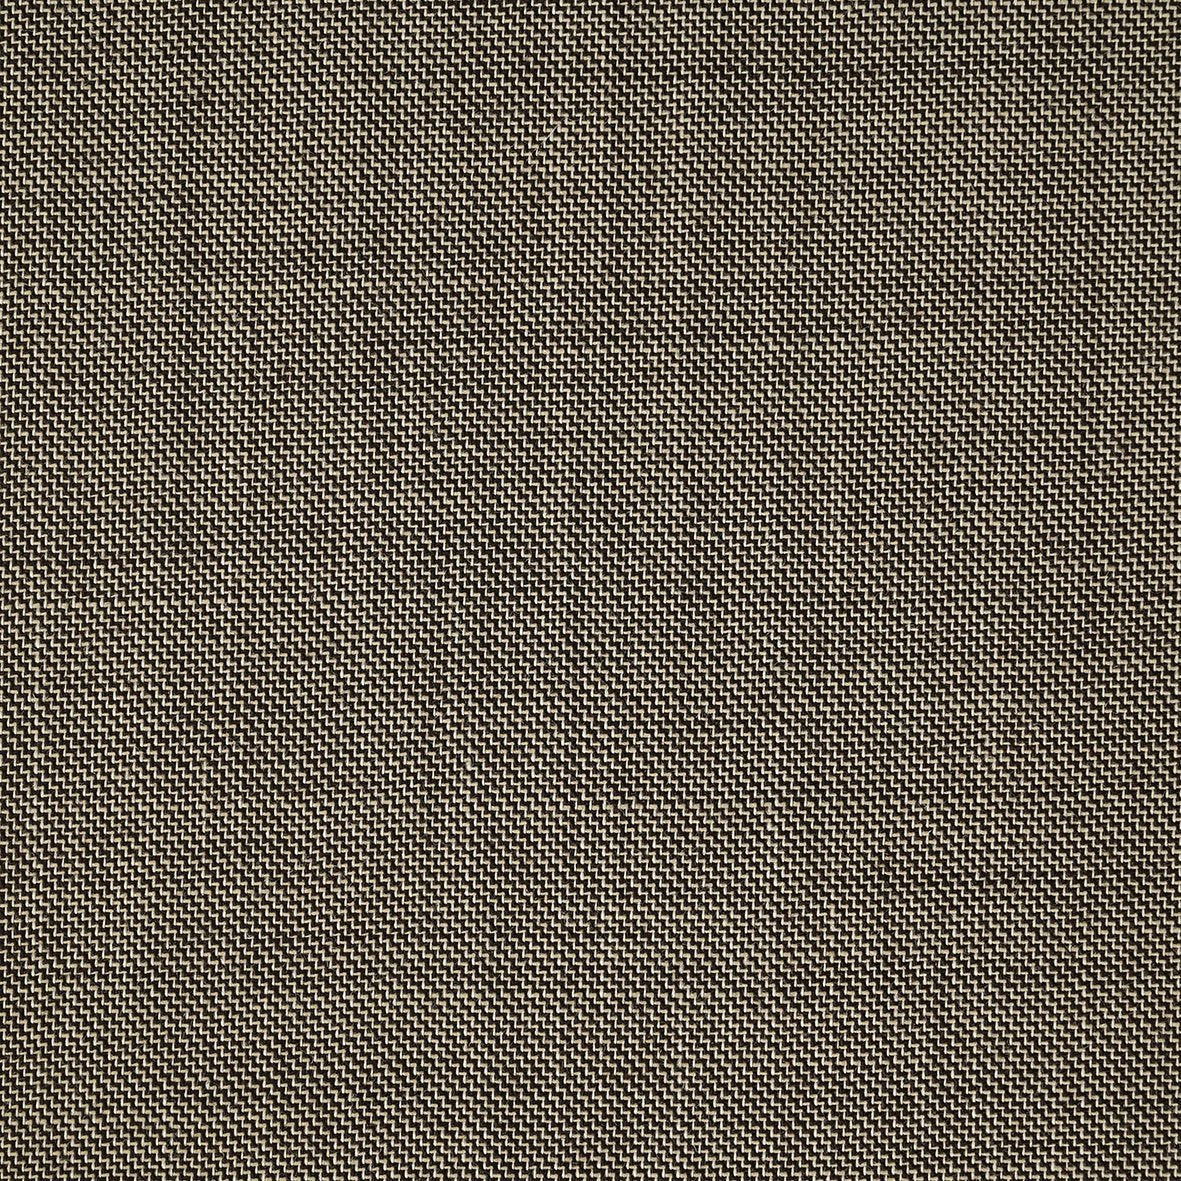 Tan Suiting Fabric 97415